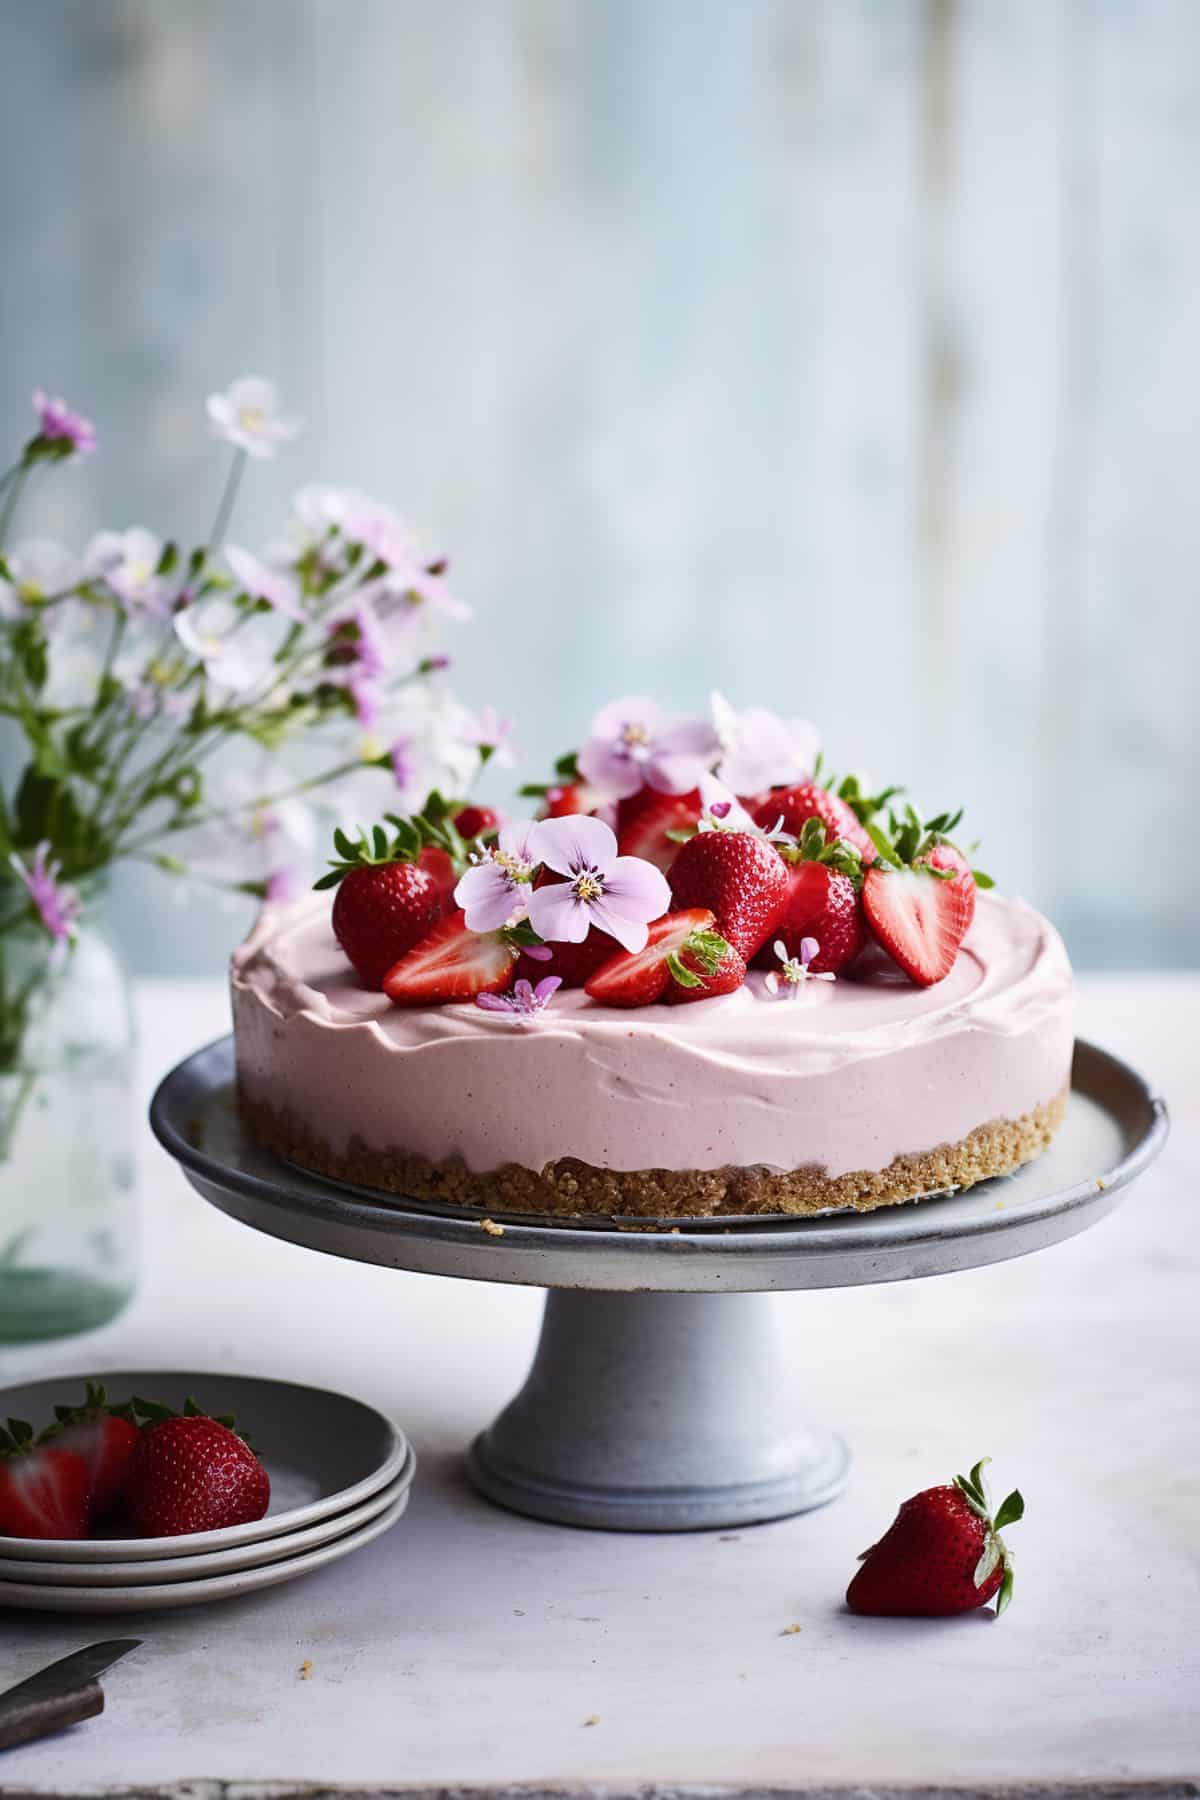 Strawberry no bake cheesecake on a cake platter.